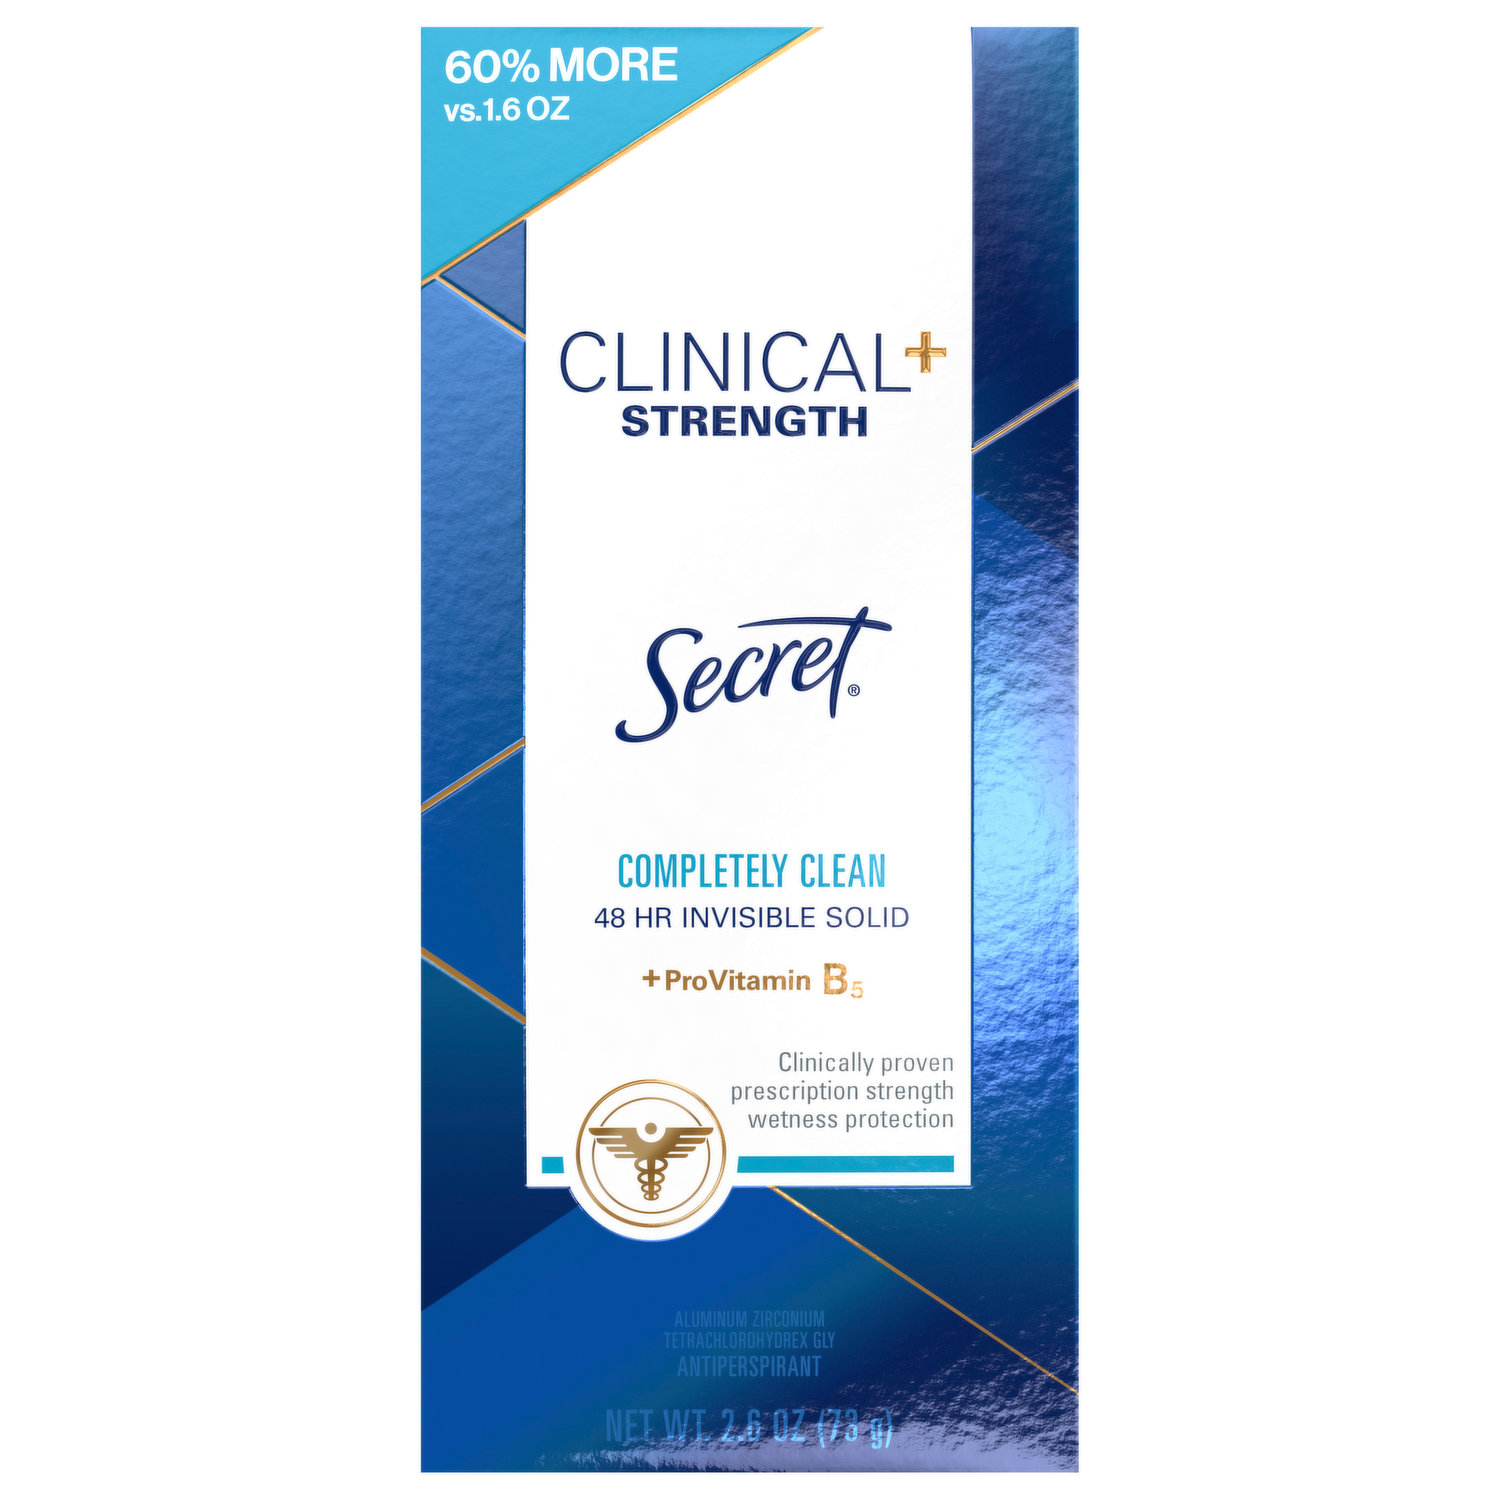 Secret Dry Spray Antiperspirant Deodorant, Tropical Hibiscus, 4.1 oz (Pack of 3)